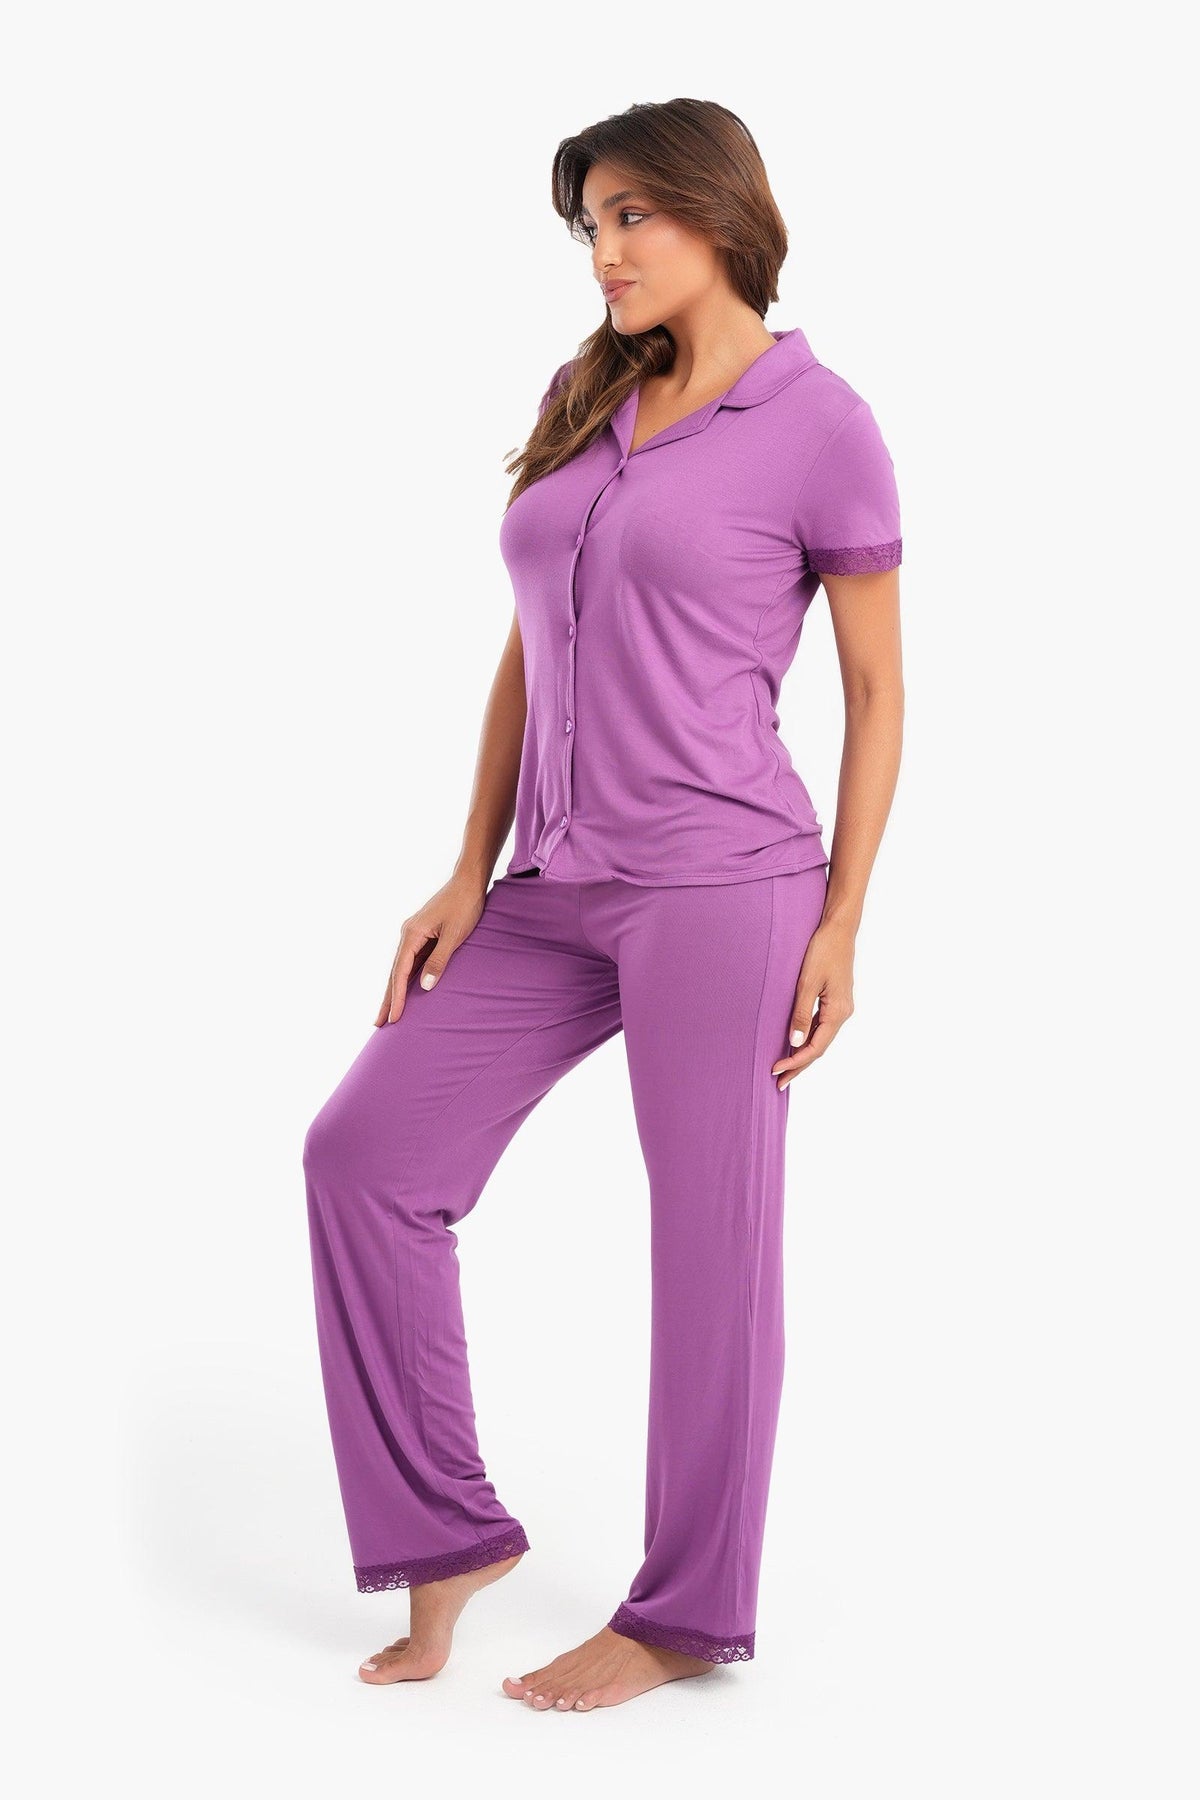 Violet Pyjama Set in Full Placket - Carina - كارينا